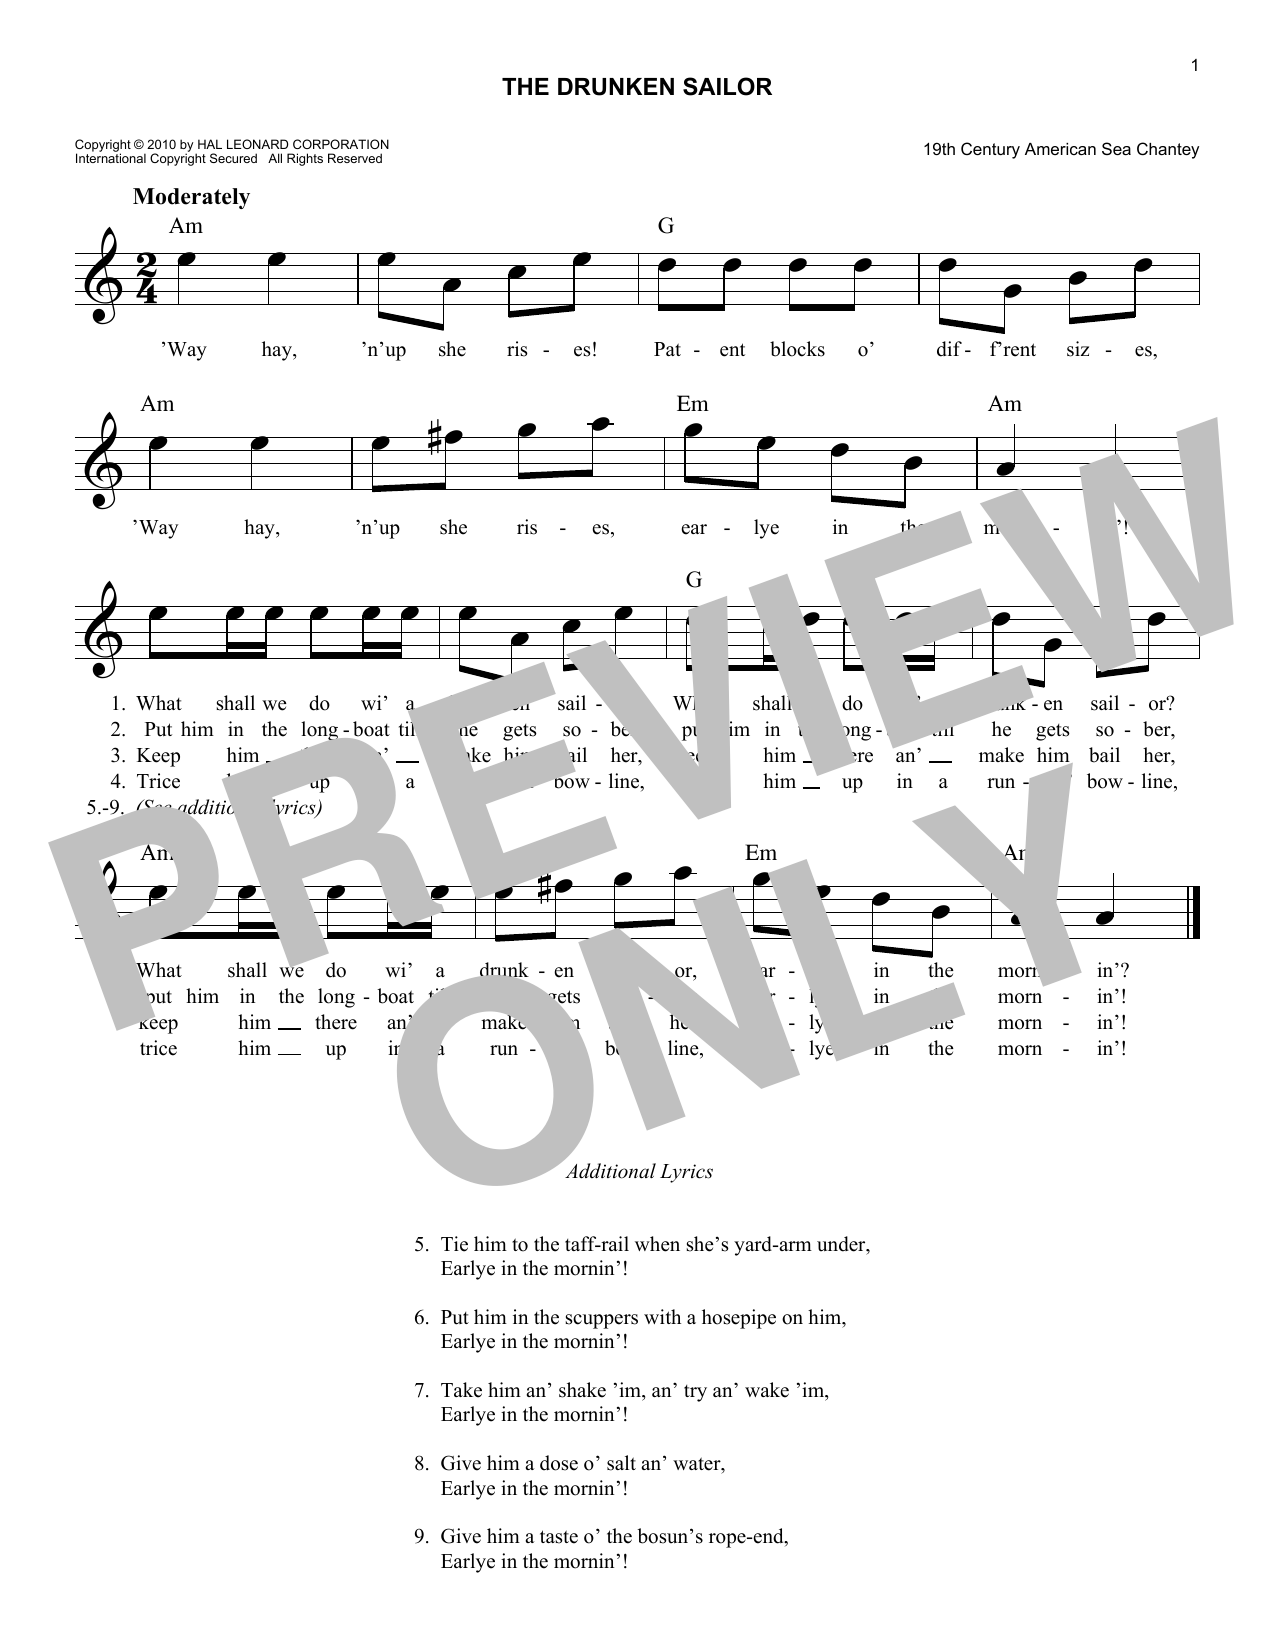 American Sea Chantey The Drunken Sailor Sheet Music Notes & Chords for Lead Sheet / Fake Book - Download or Print PDF